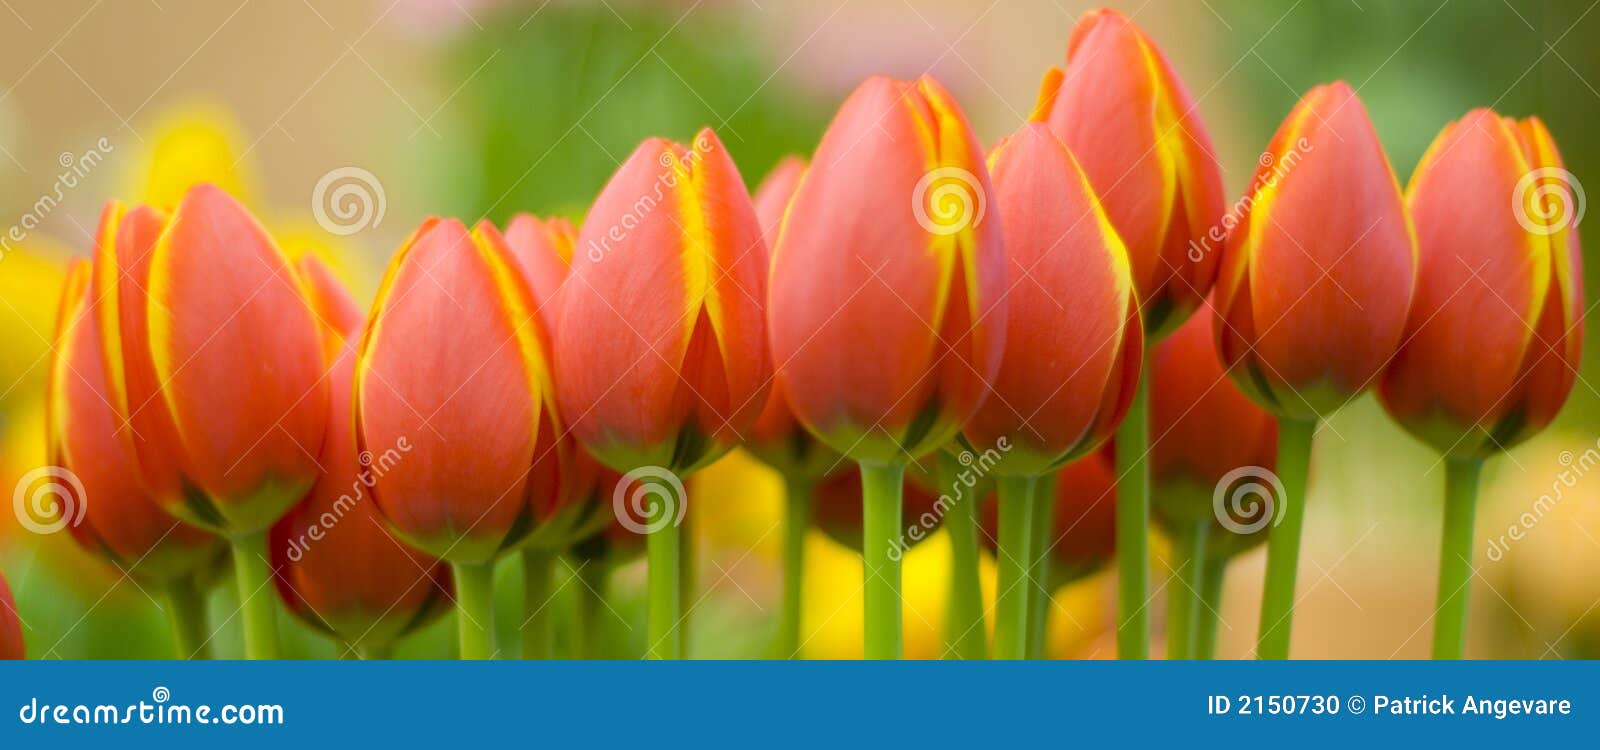 yellow orange tulips